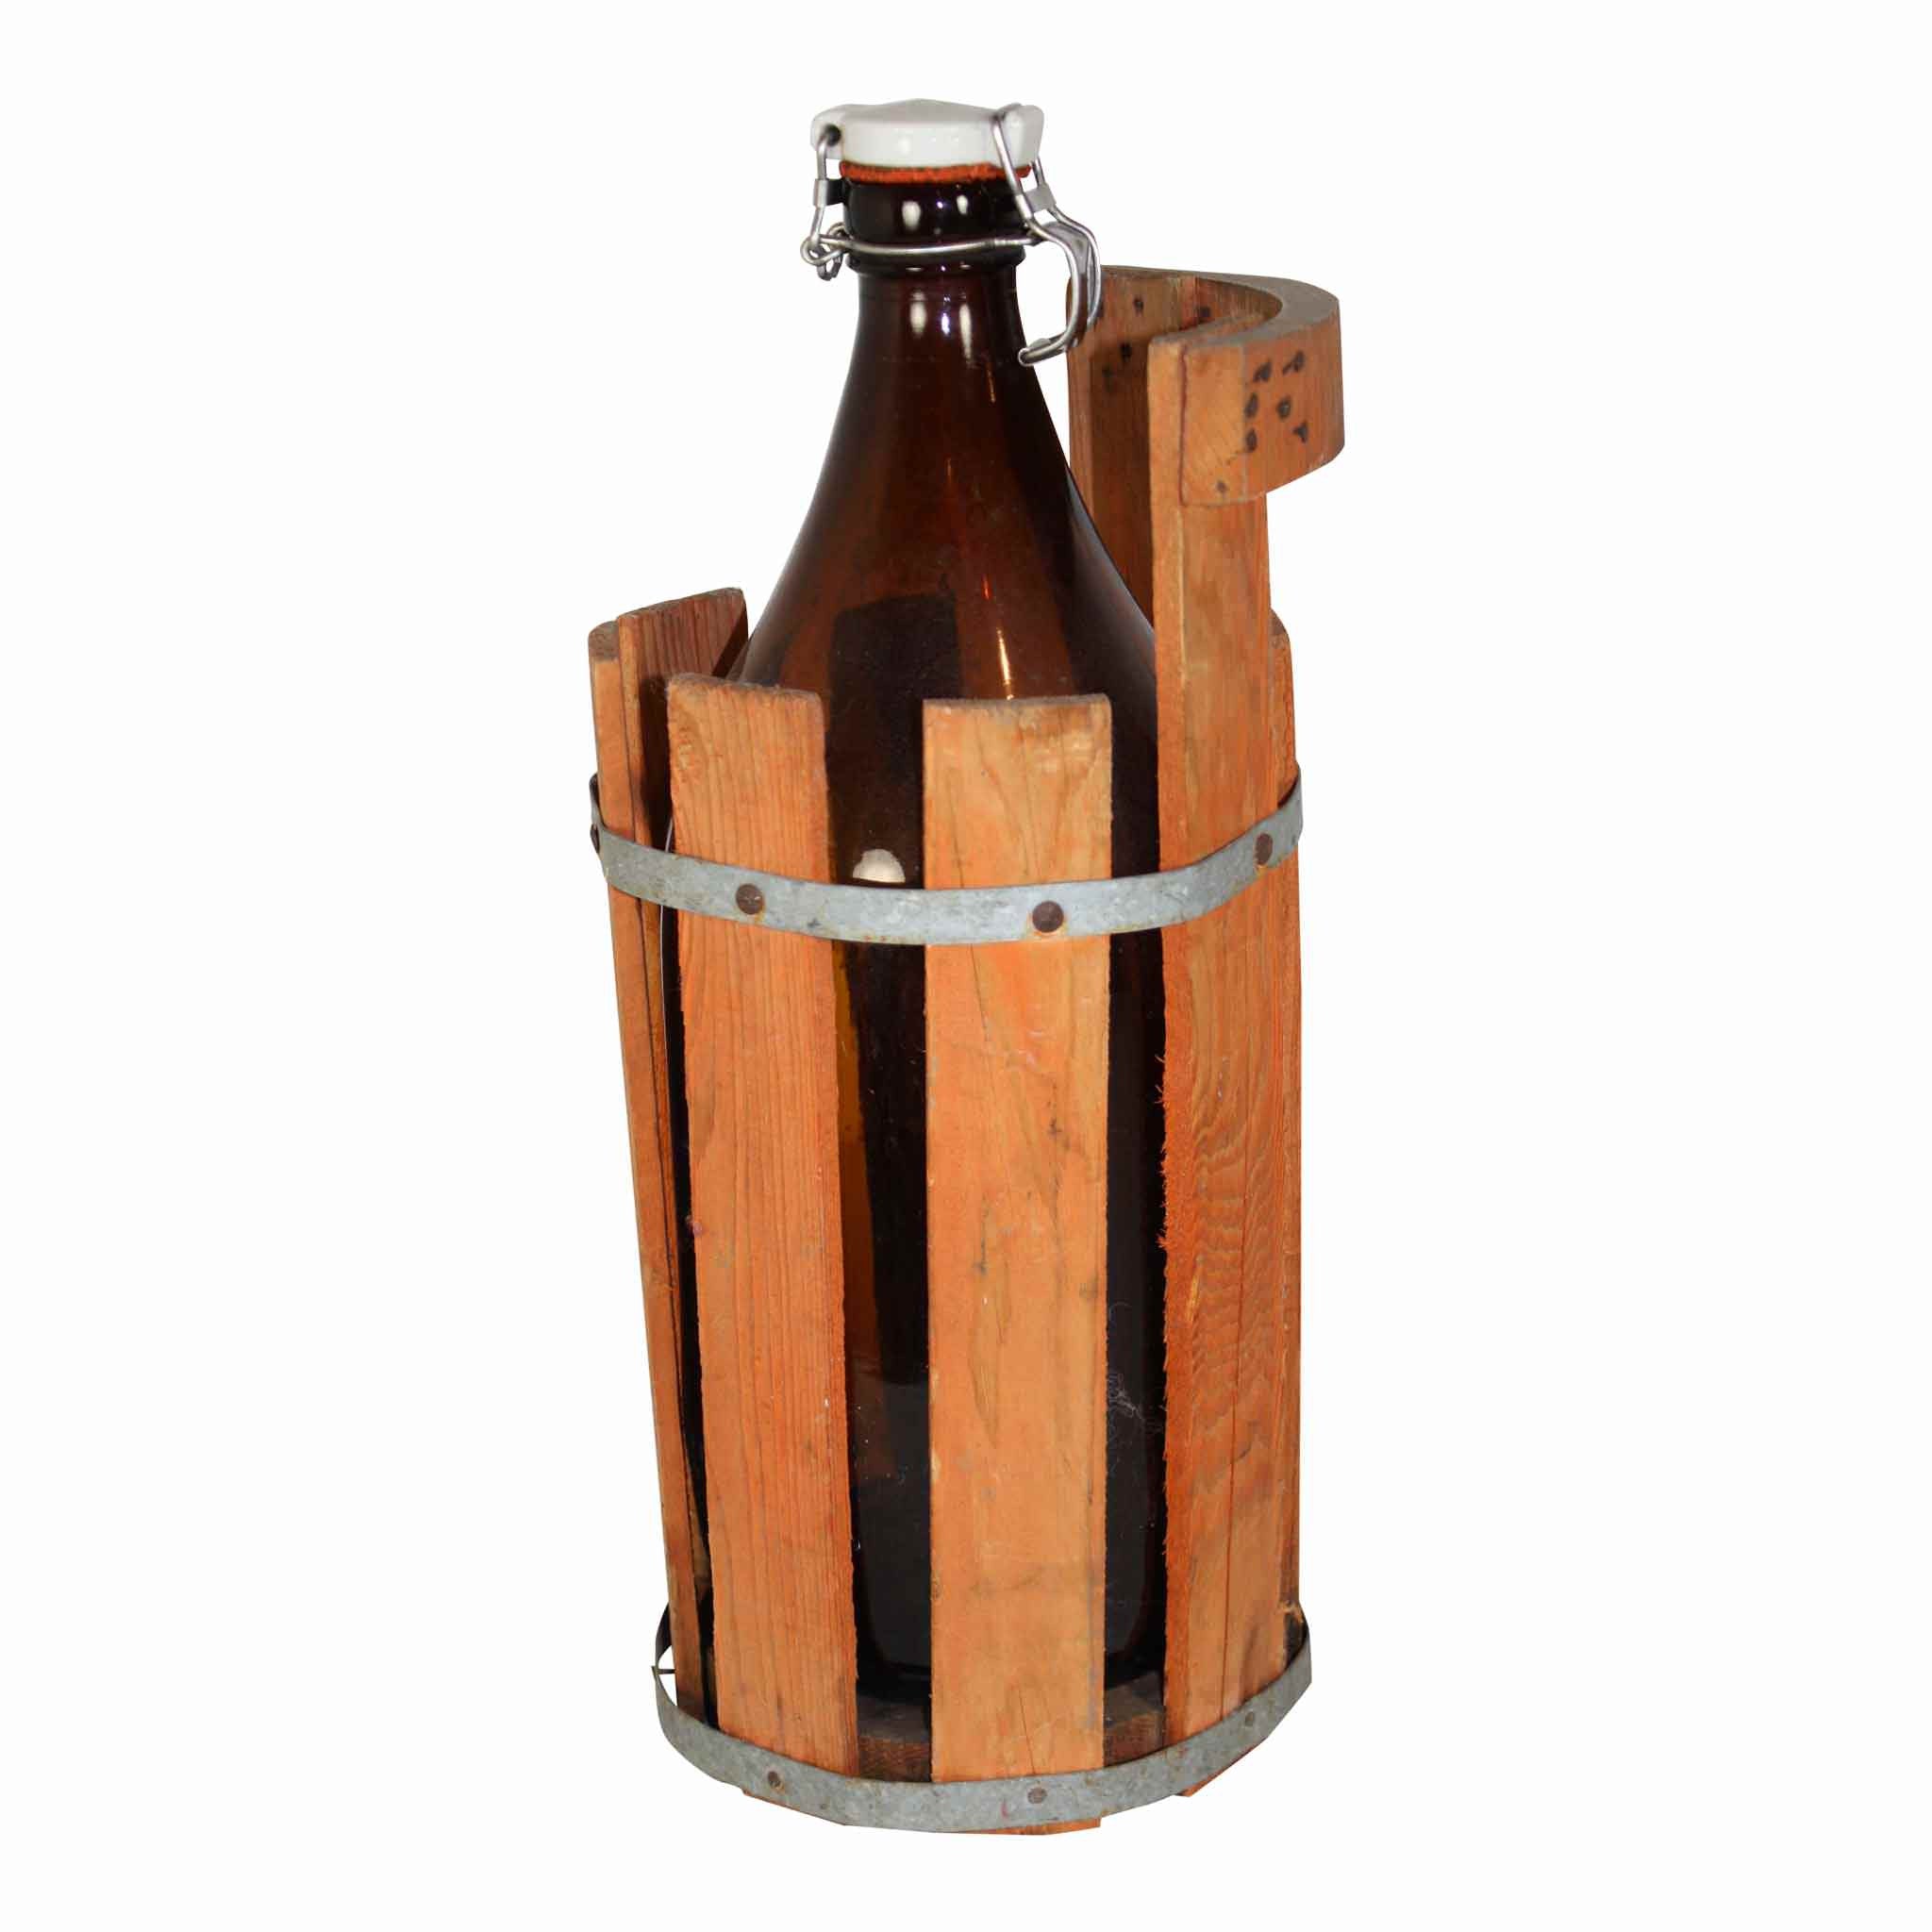 Swedish Beer Bottle in Wood Bucket